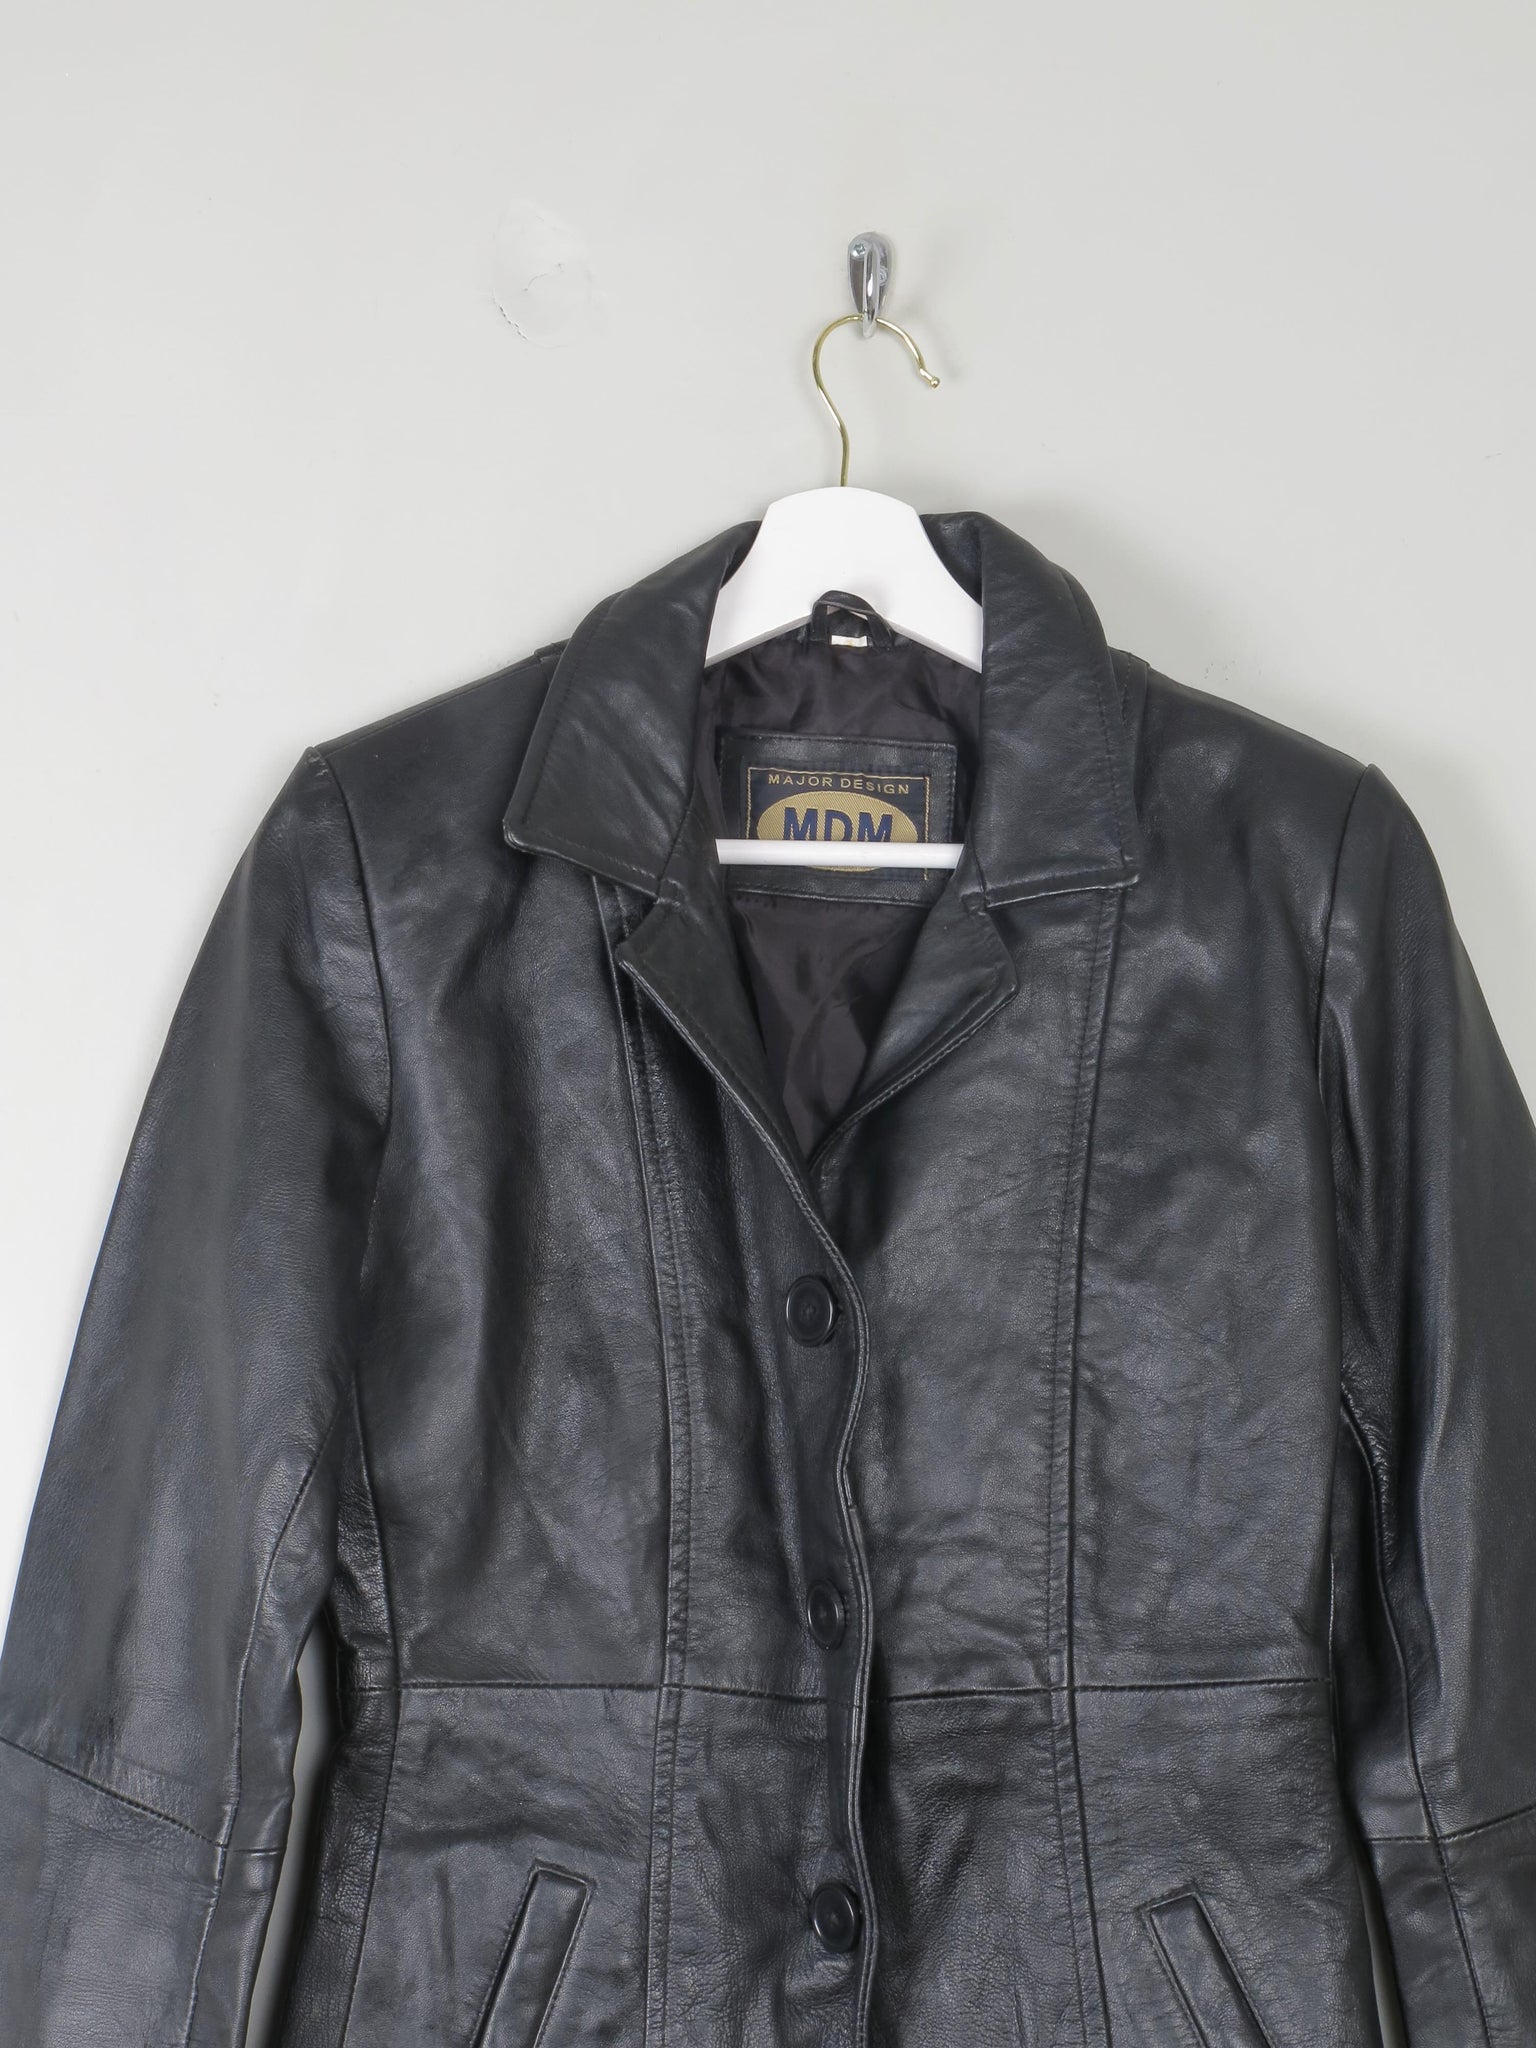 Women's Vintage Black Leather Jacket XS - The Harlequin